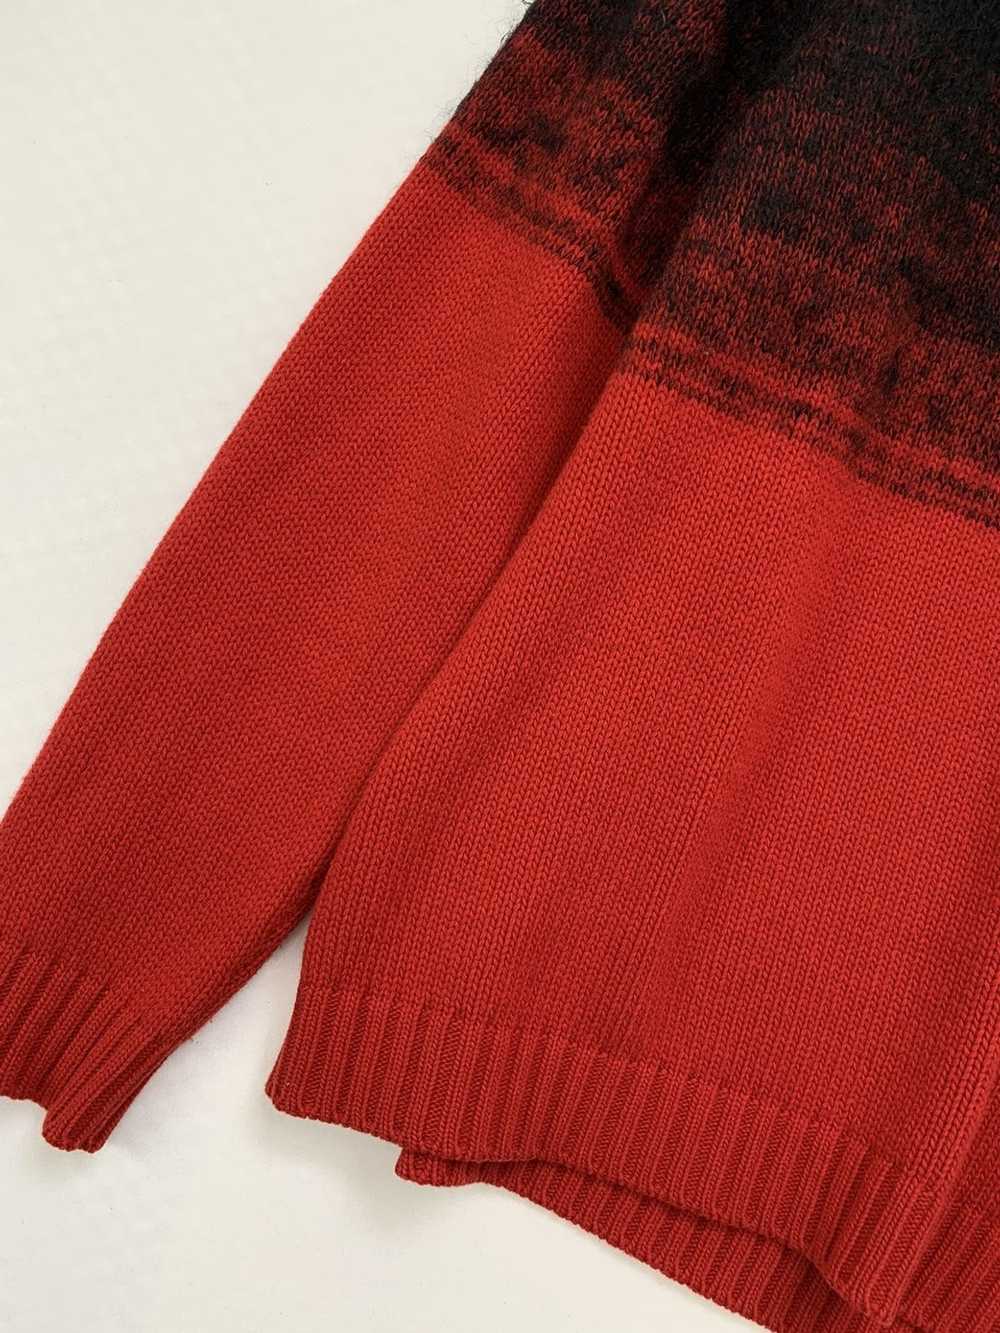 Prada FW2017 mohair wool knit red black - image 4